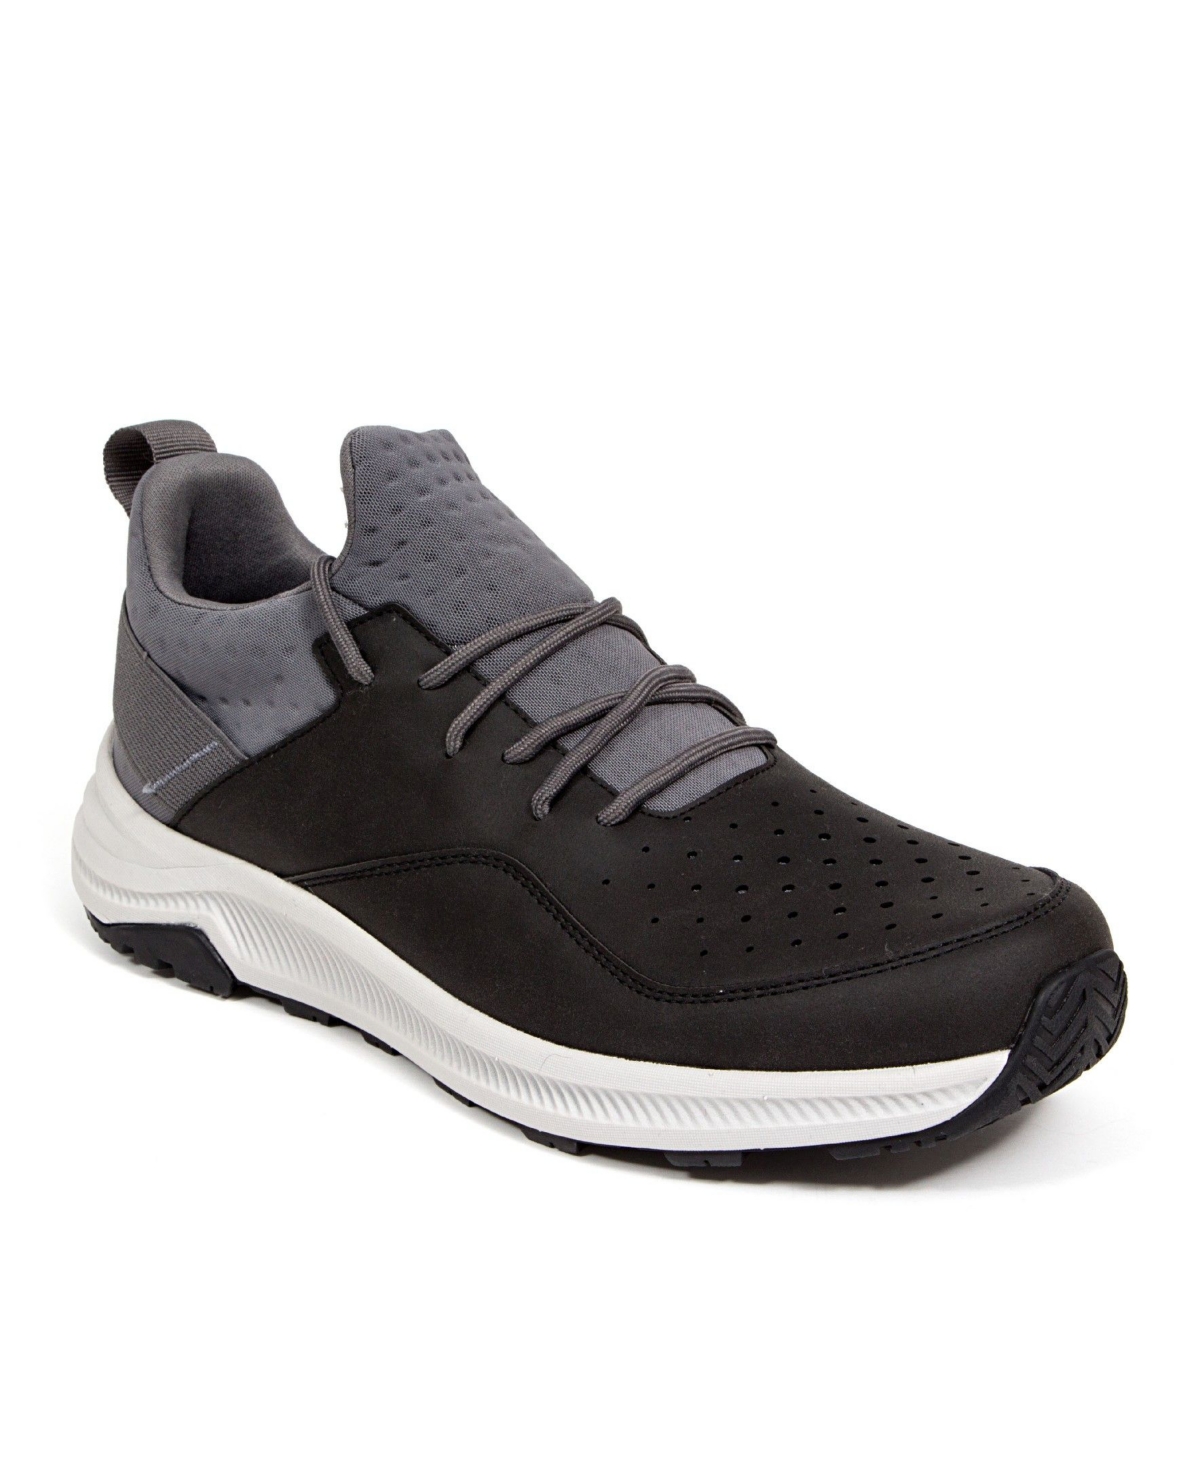 Men's Contour Comfort Casual Hybrid Hiking Sneakers - Olive, Black